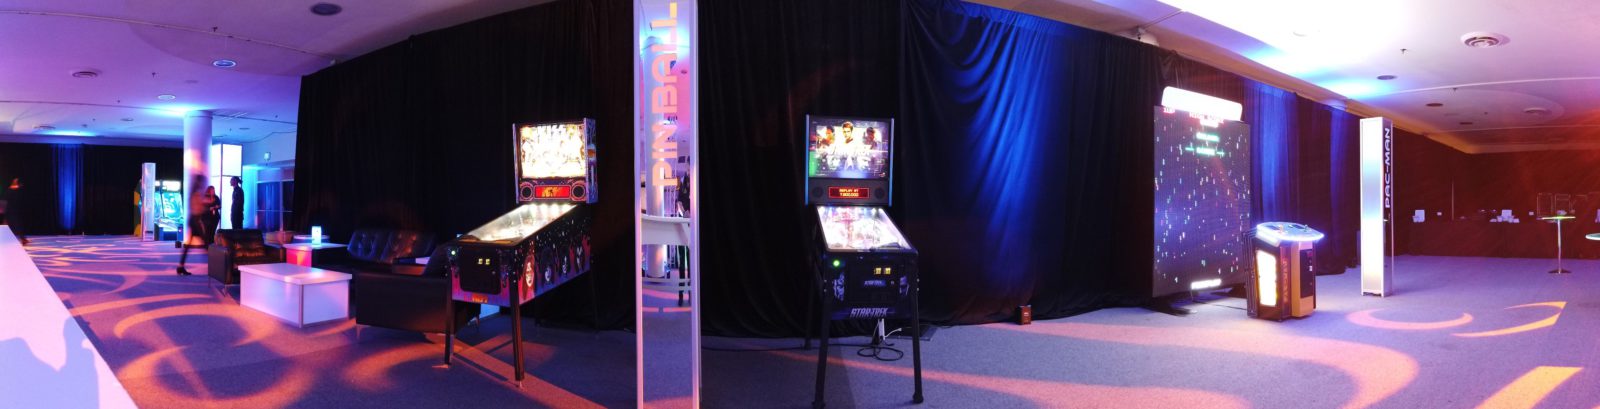 company party arcade room